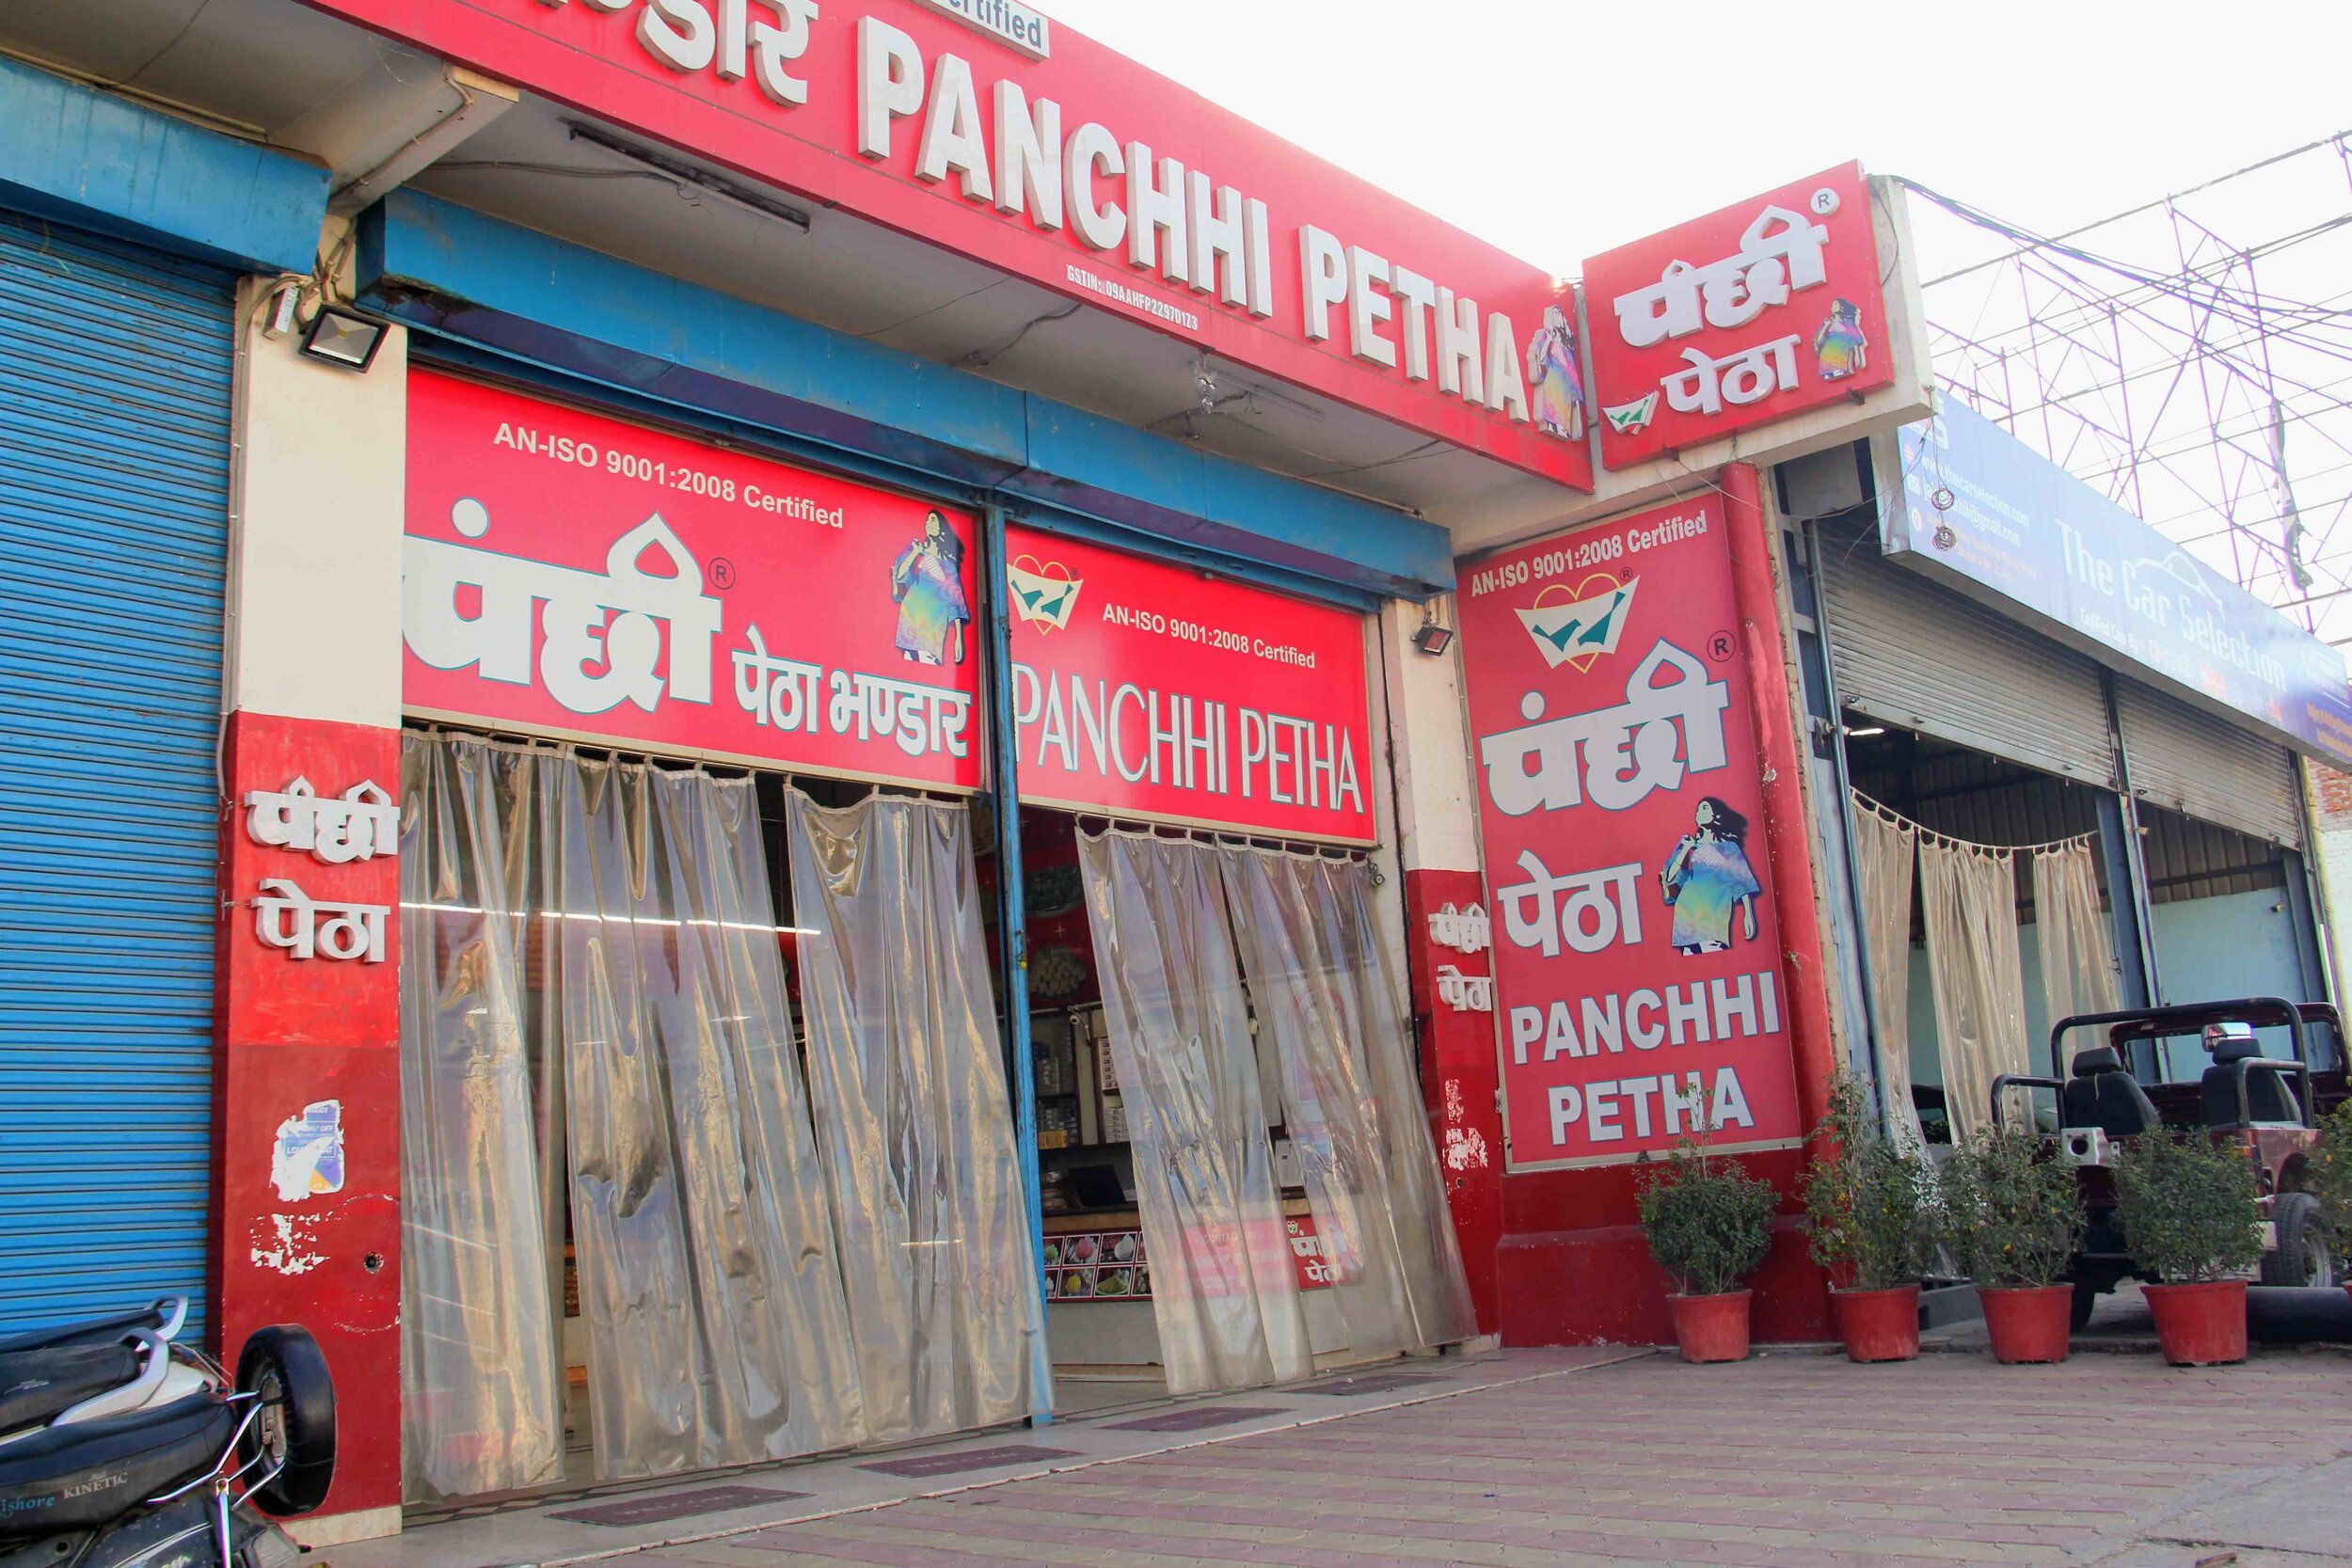 Agra’s most famous petha shop